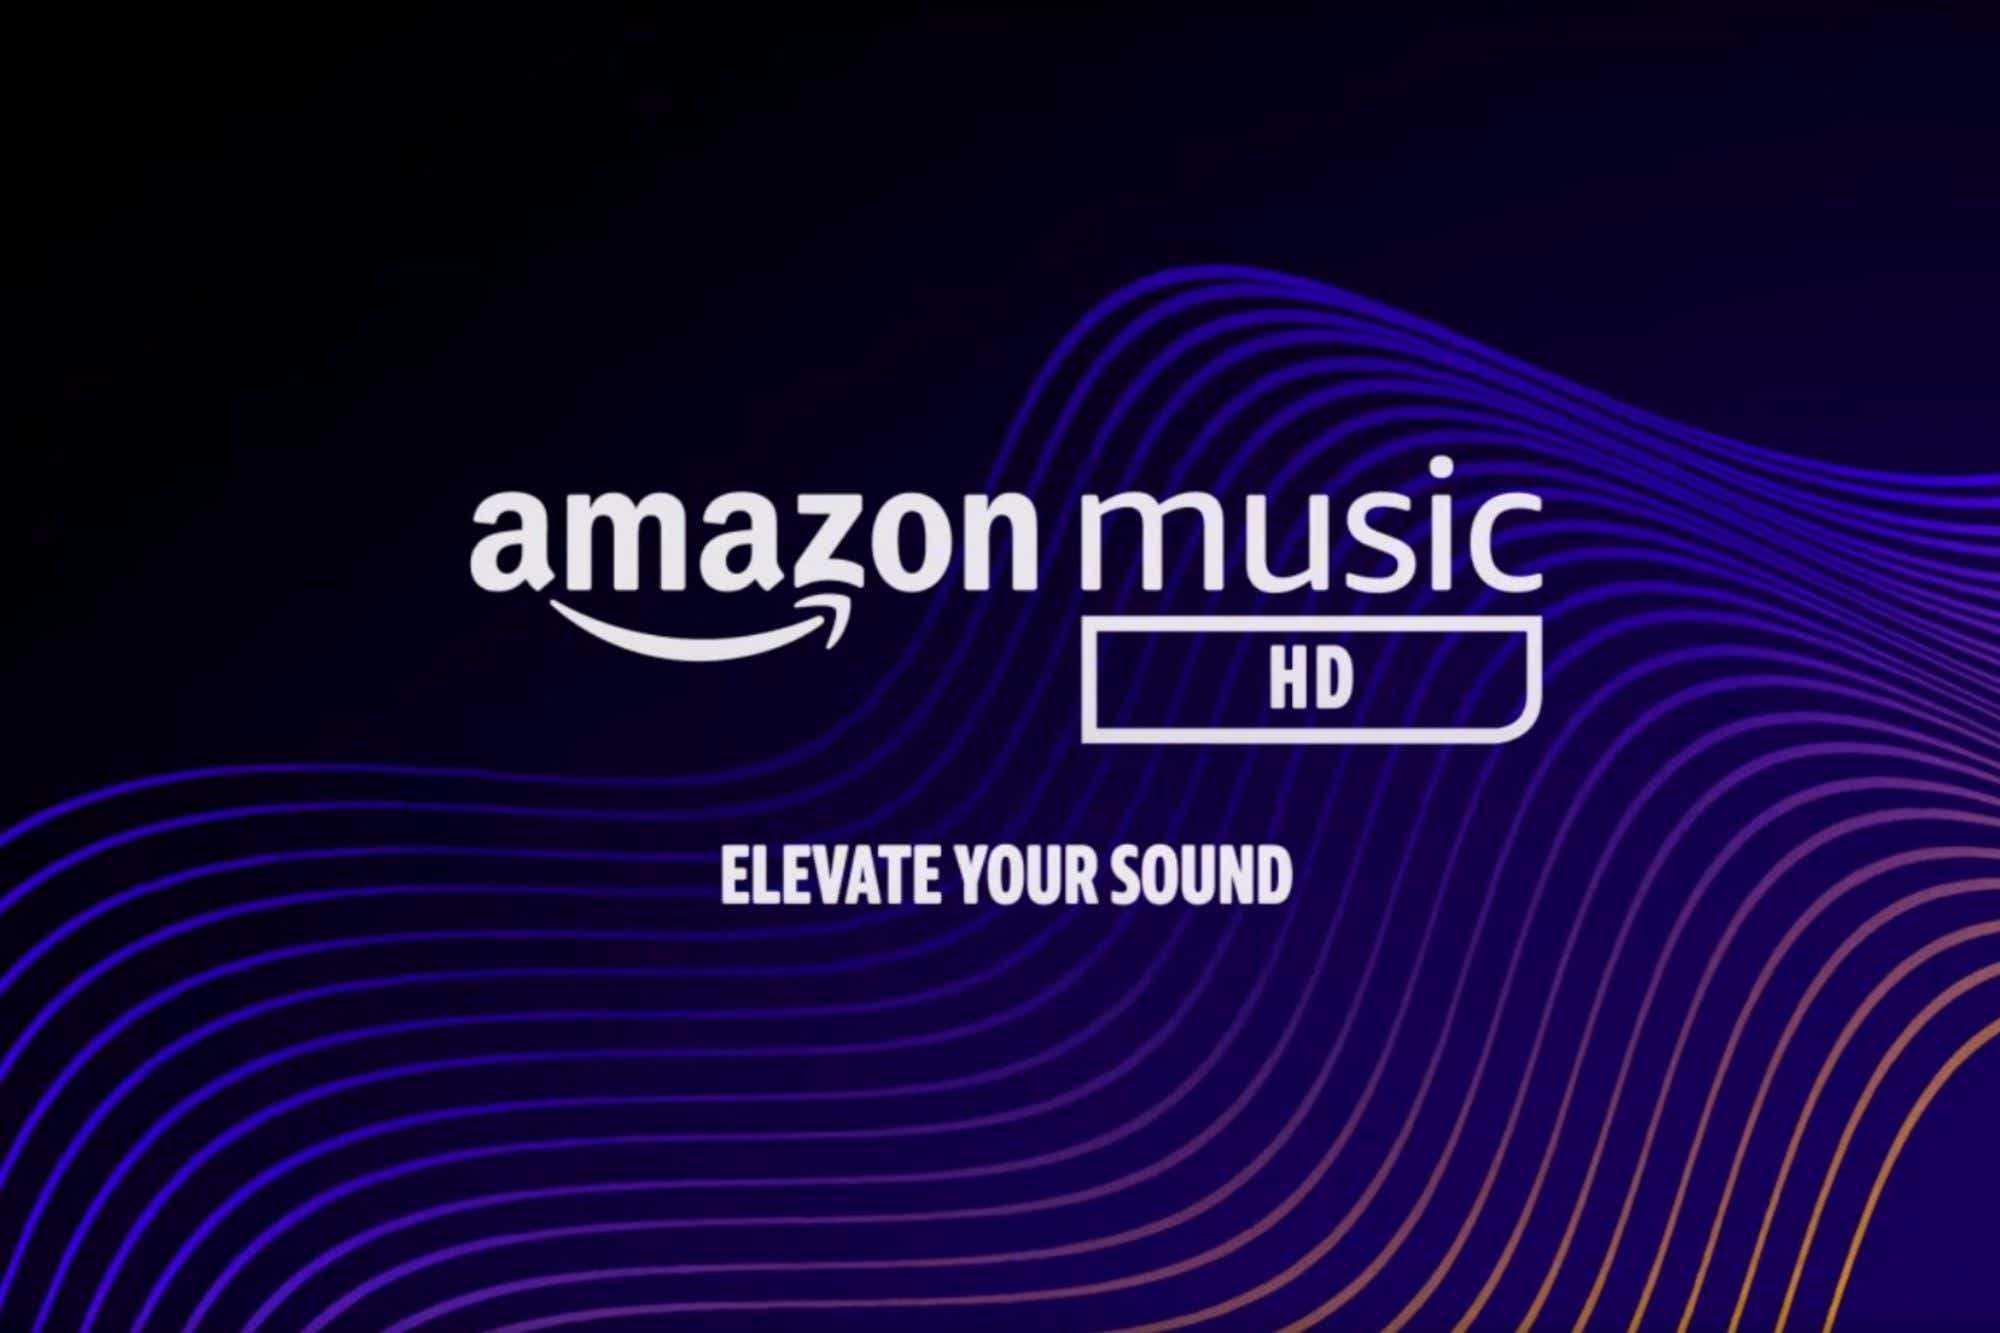 Amazon Music HD